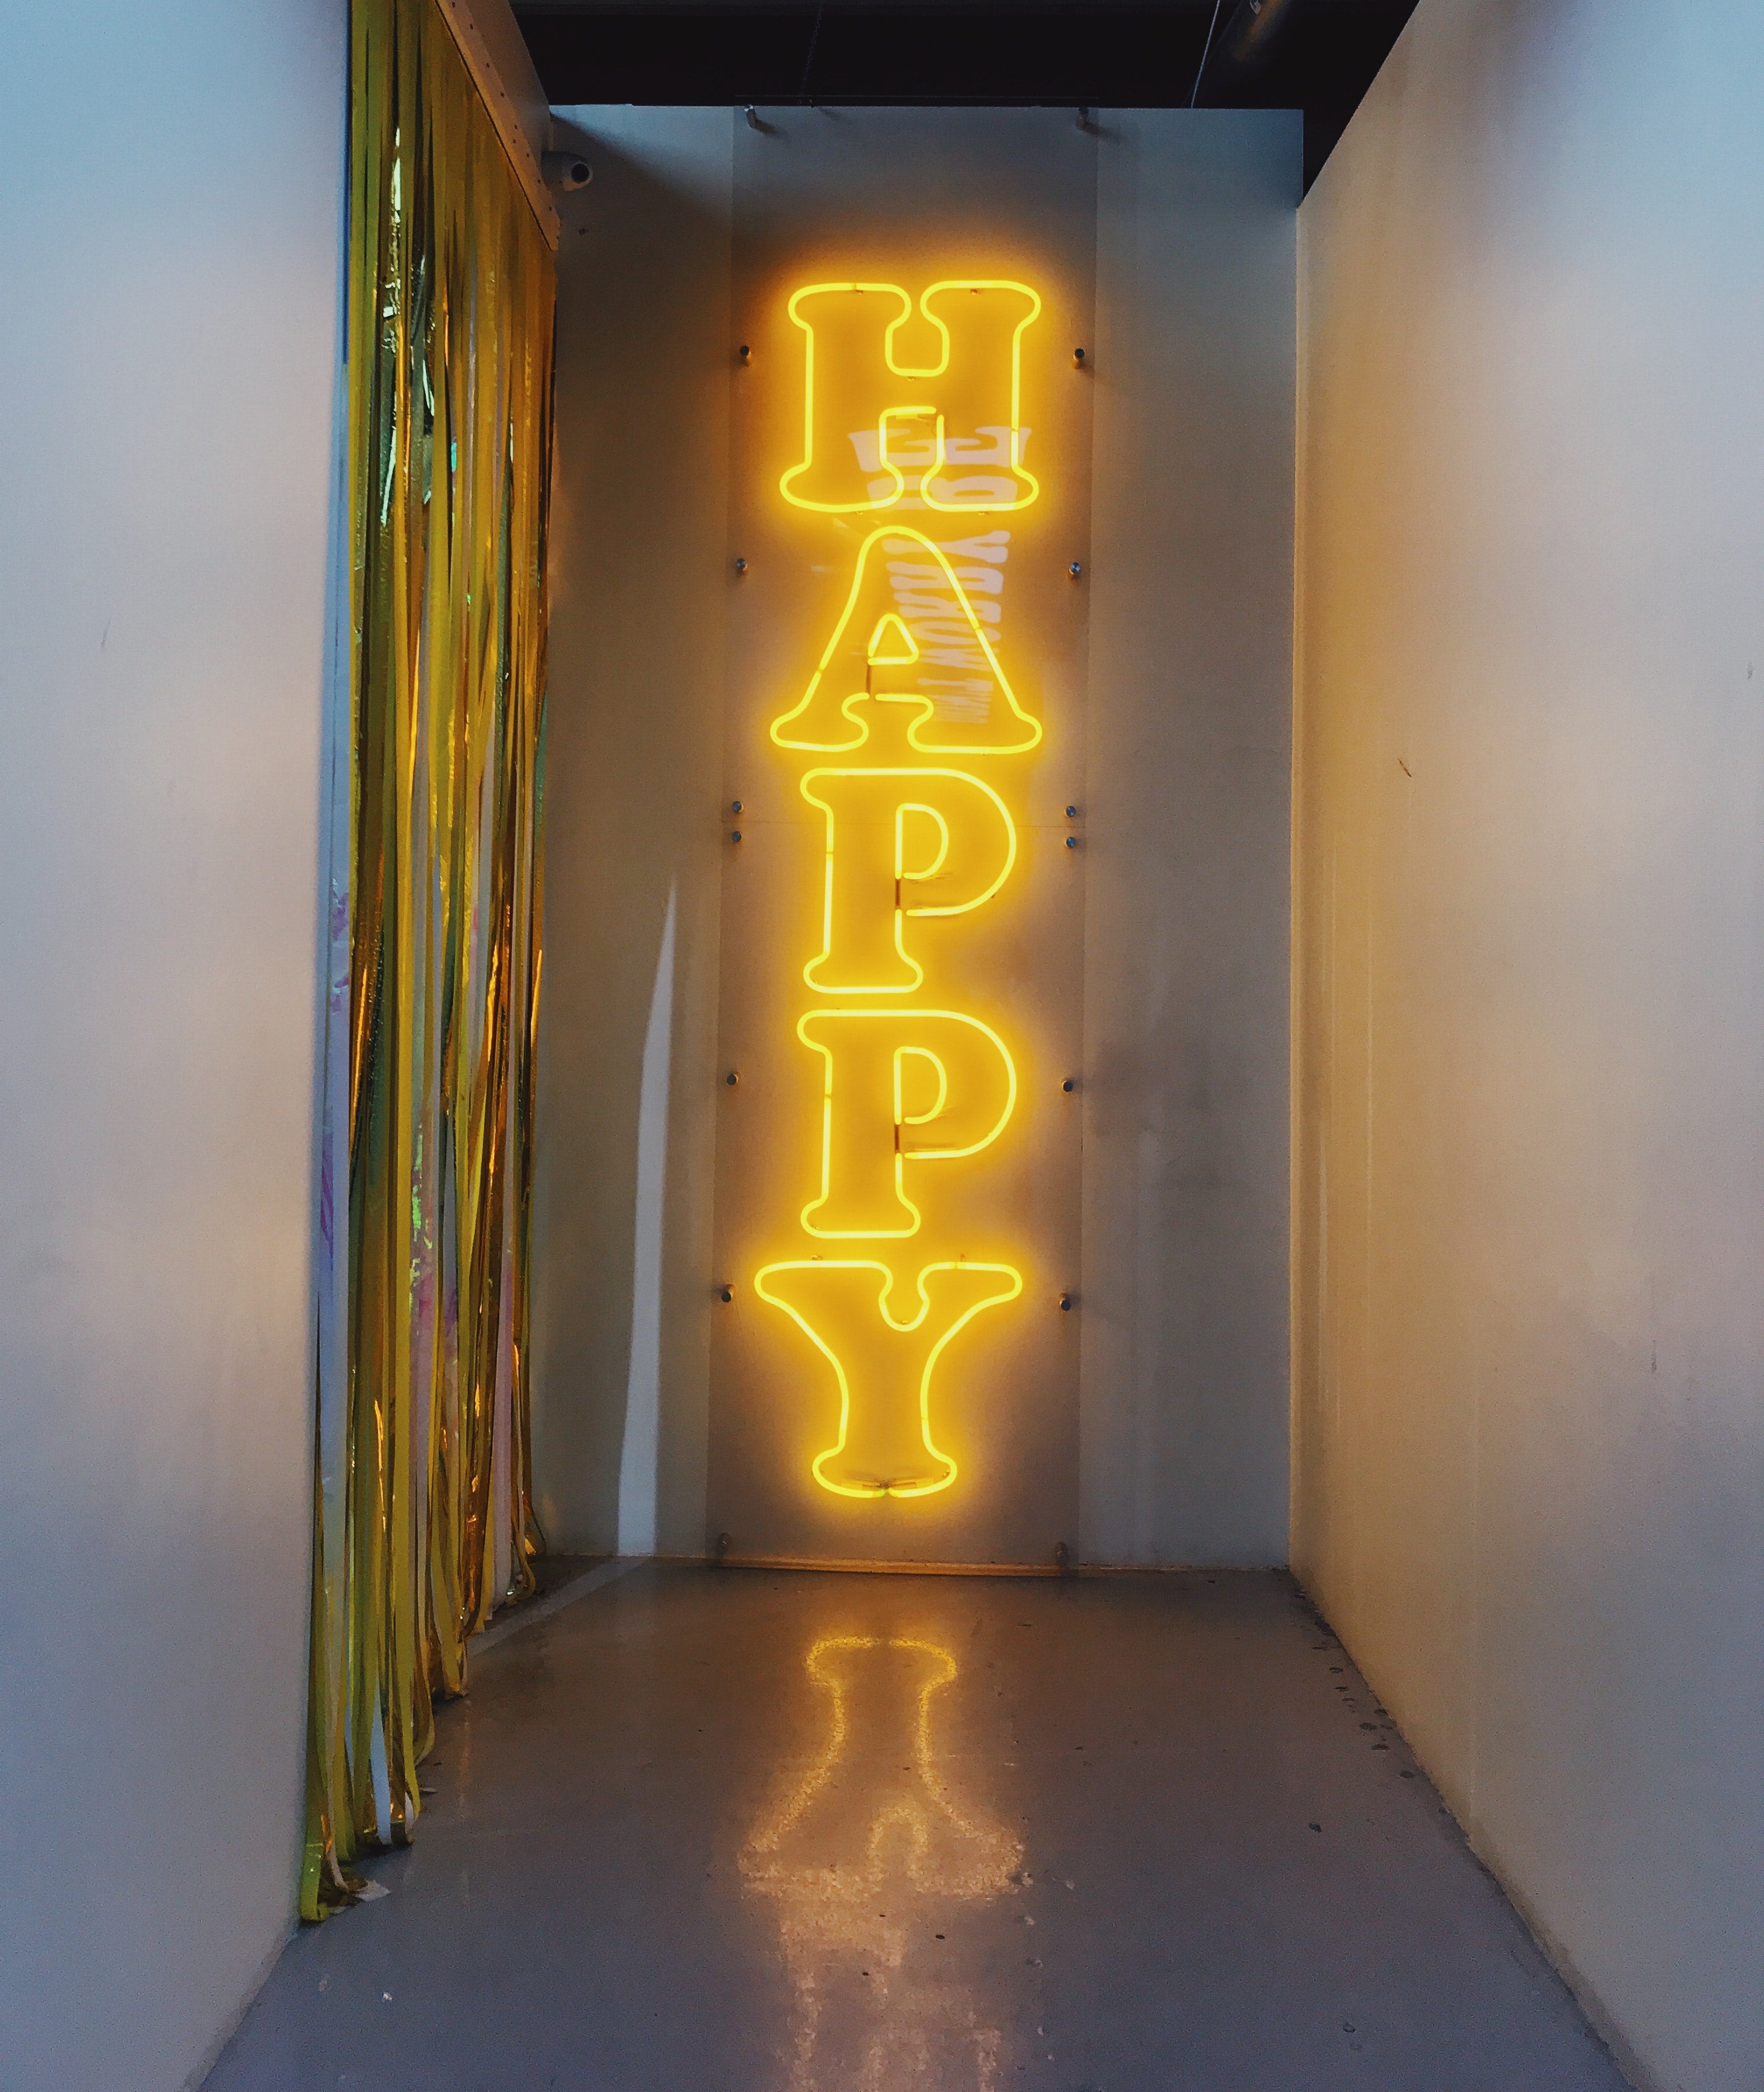 Yellow Neon Sign "Happy" on gray wall background. Brandi Ibrao - Unsplash